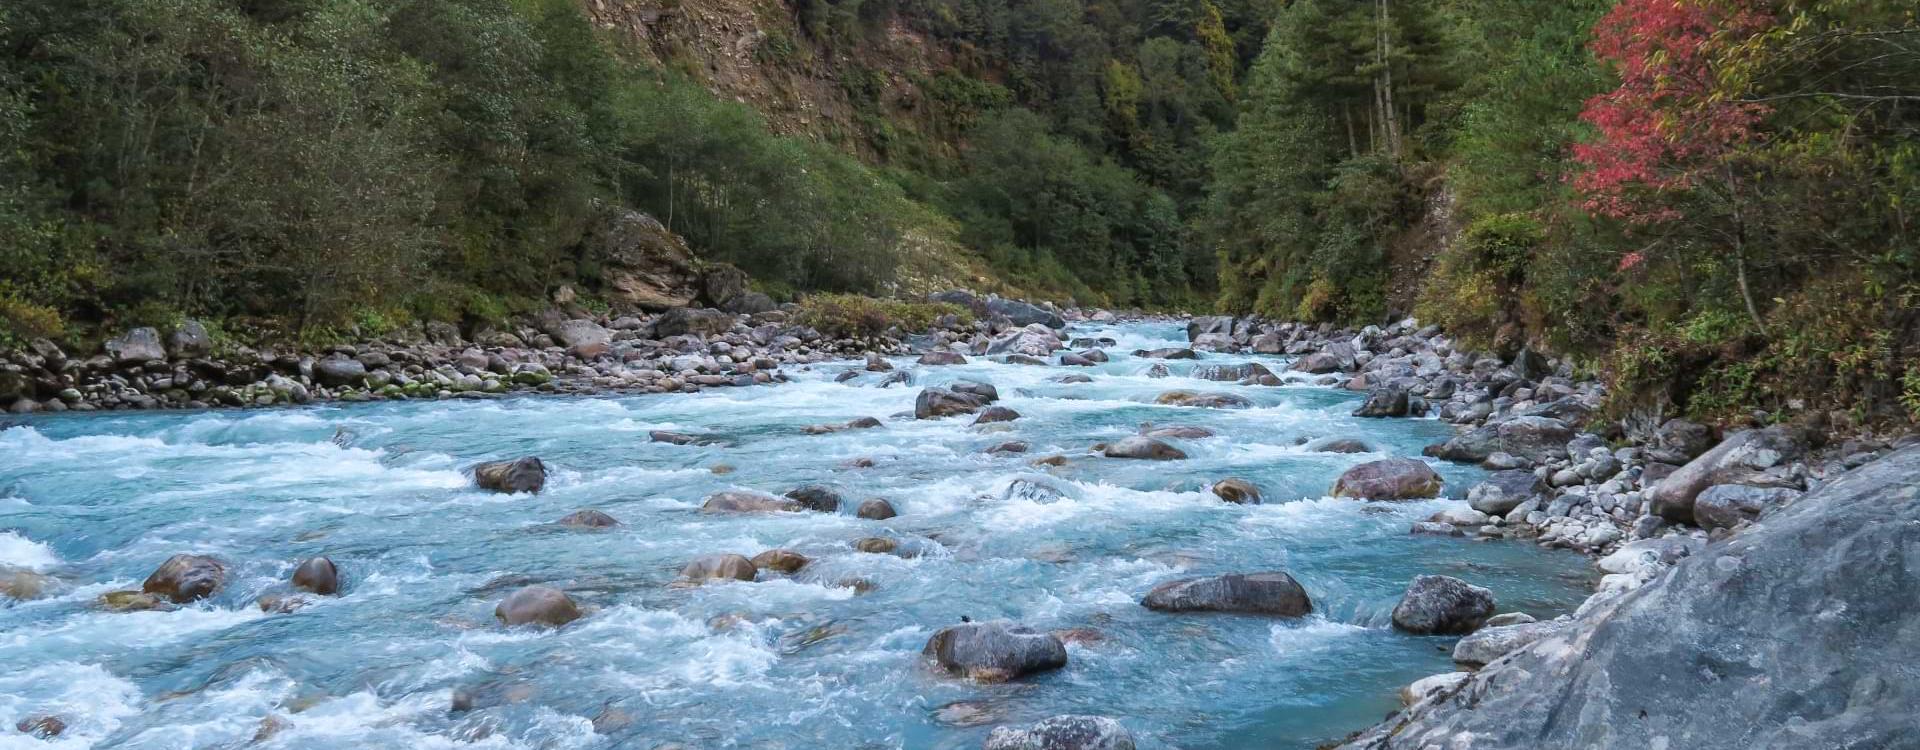 rivers in nepal